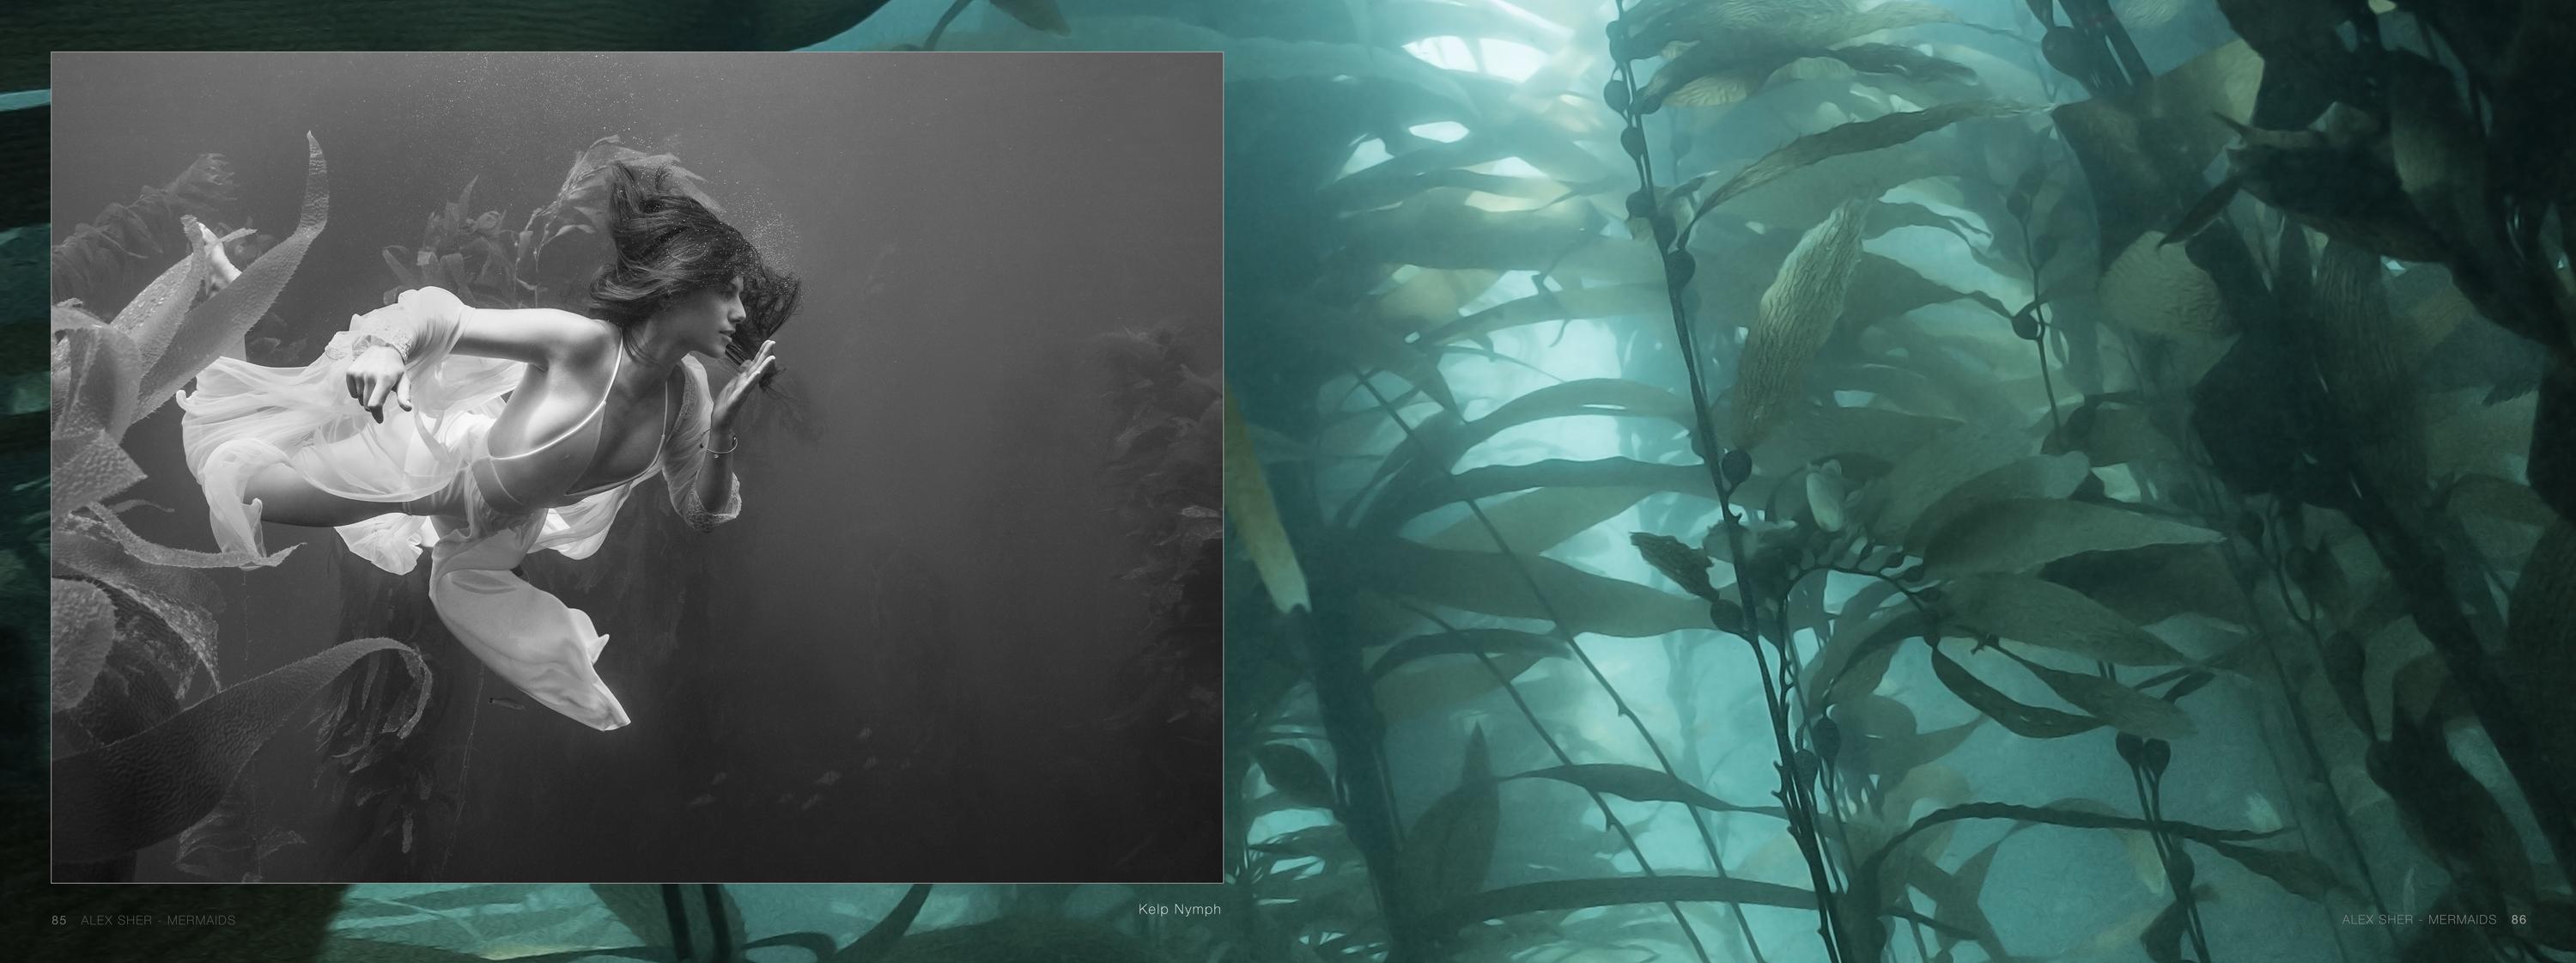 Mermaids -  a book of underwater nude and ocean wildlife photographs 16